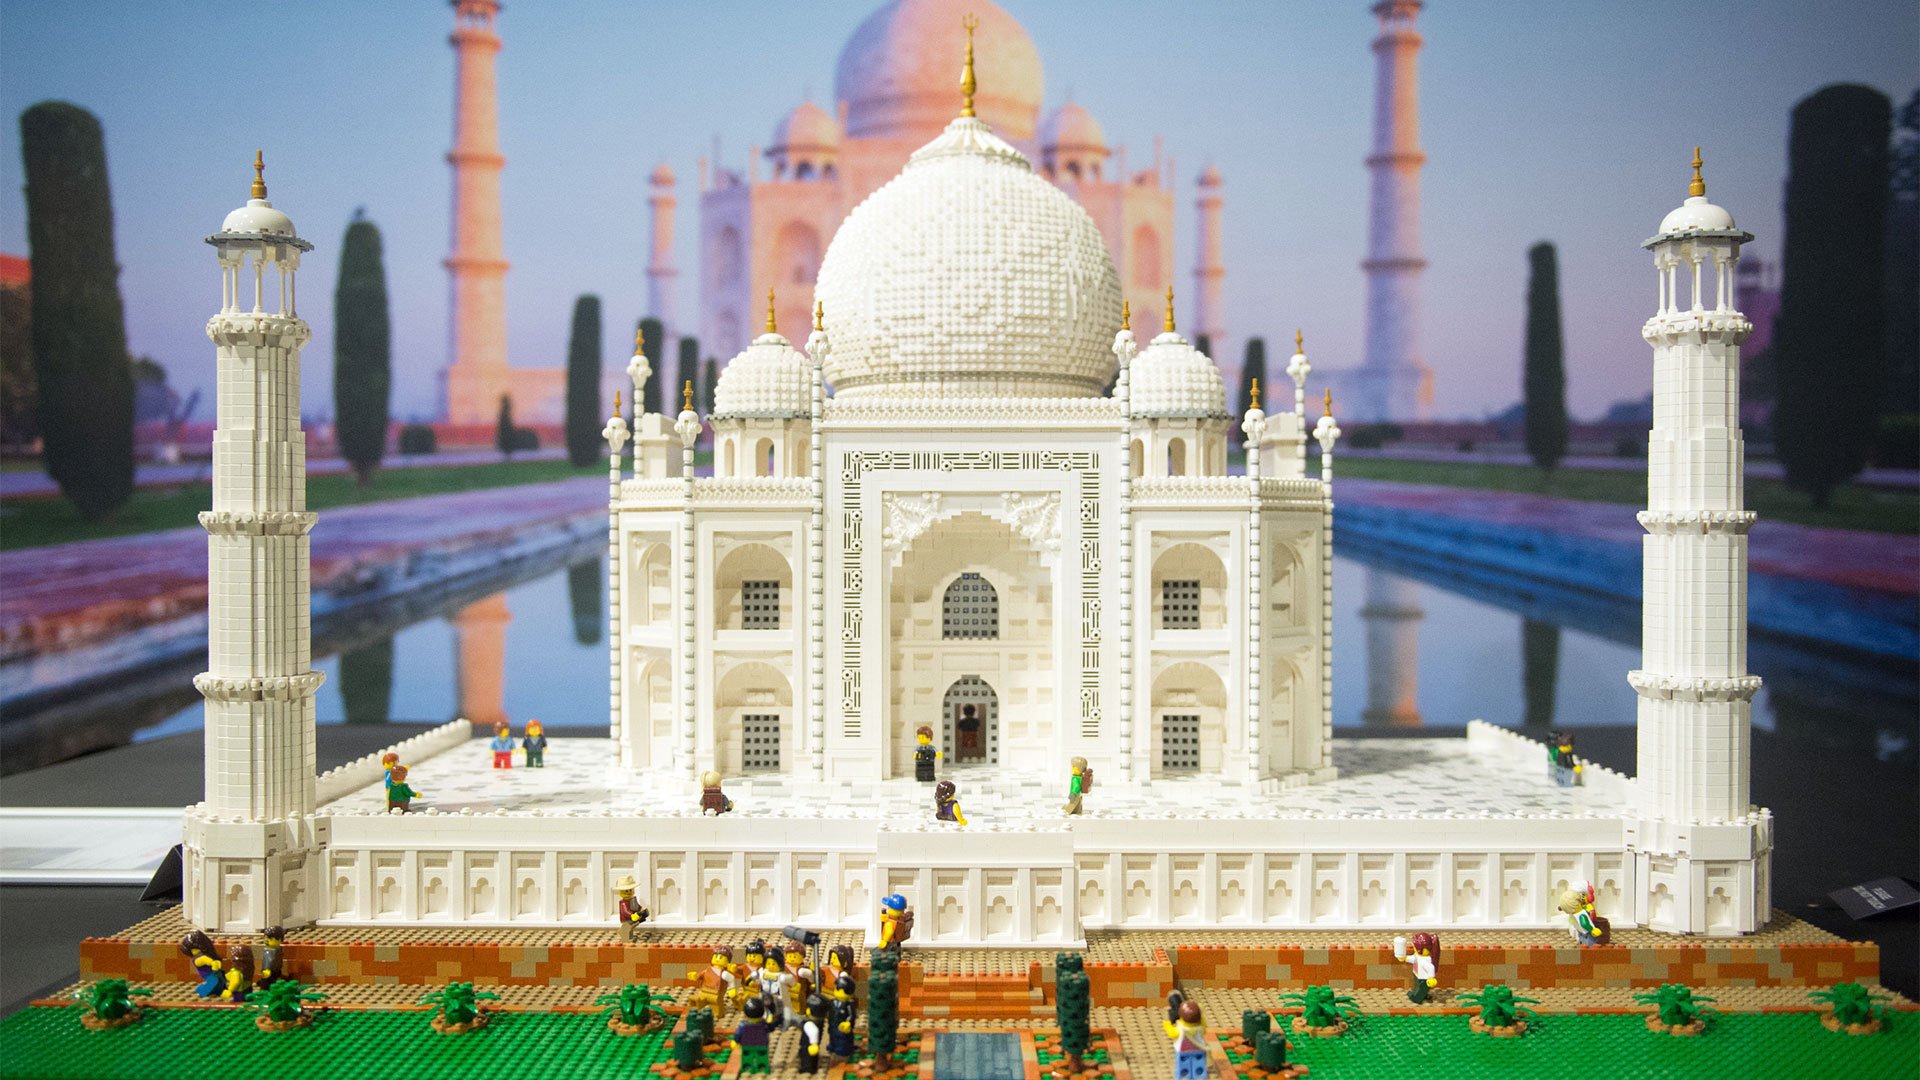 Das Taj Mahal aus Legosteinen | picture alliance / Photoshot